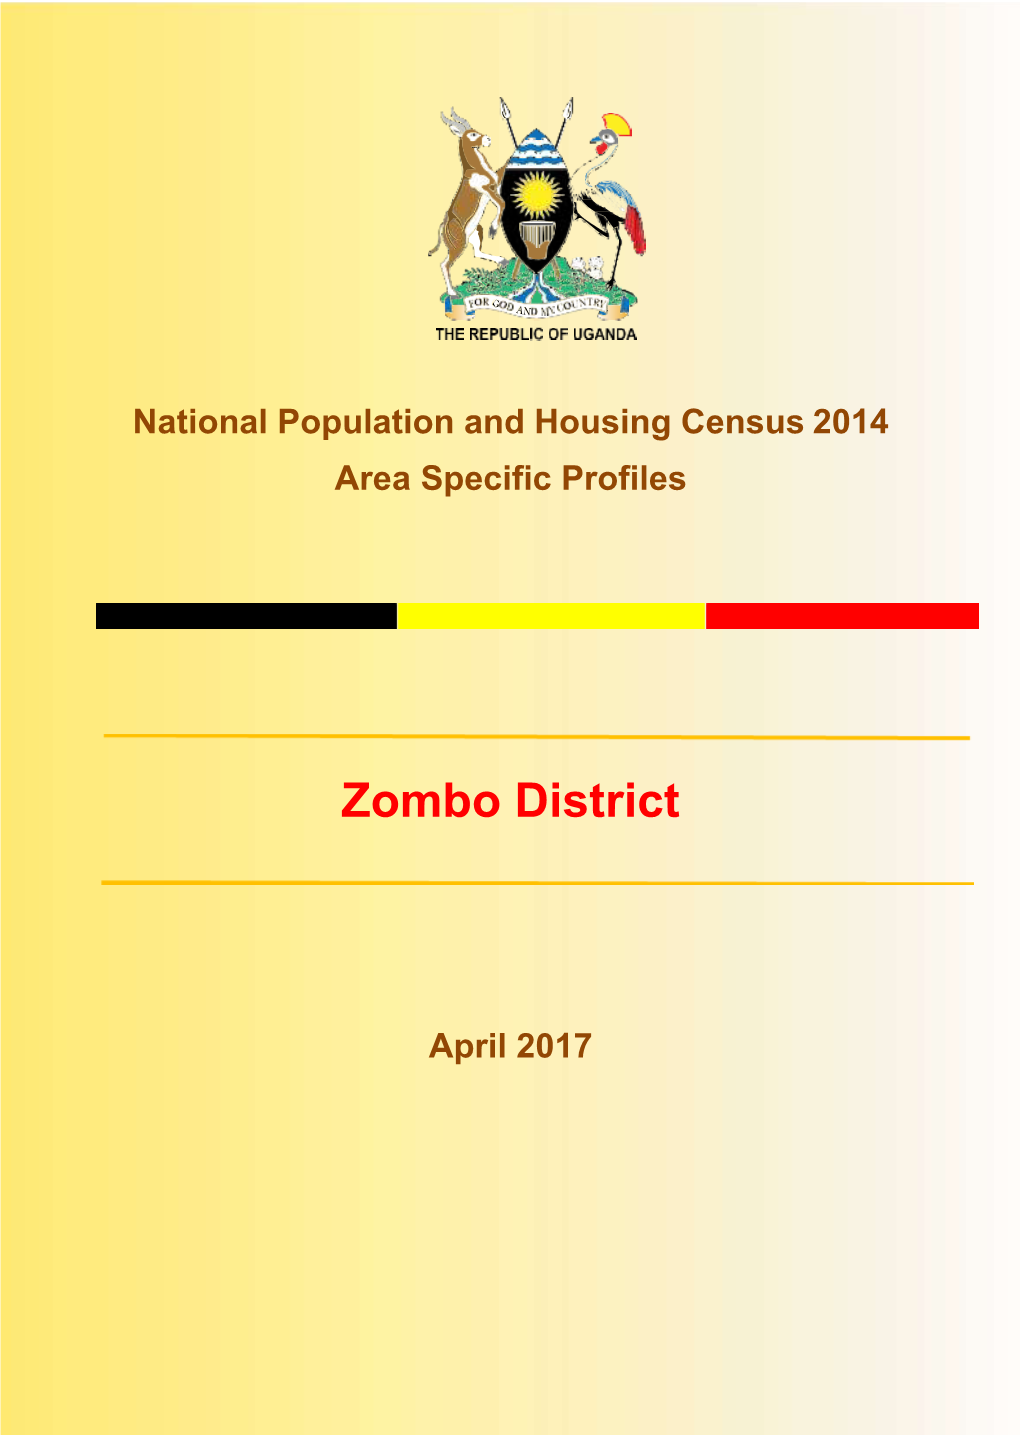 Zombo District